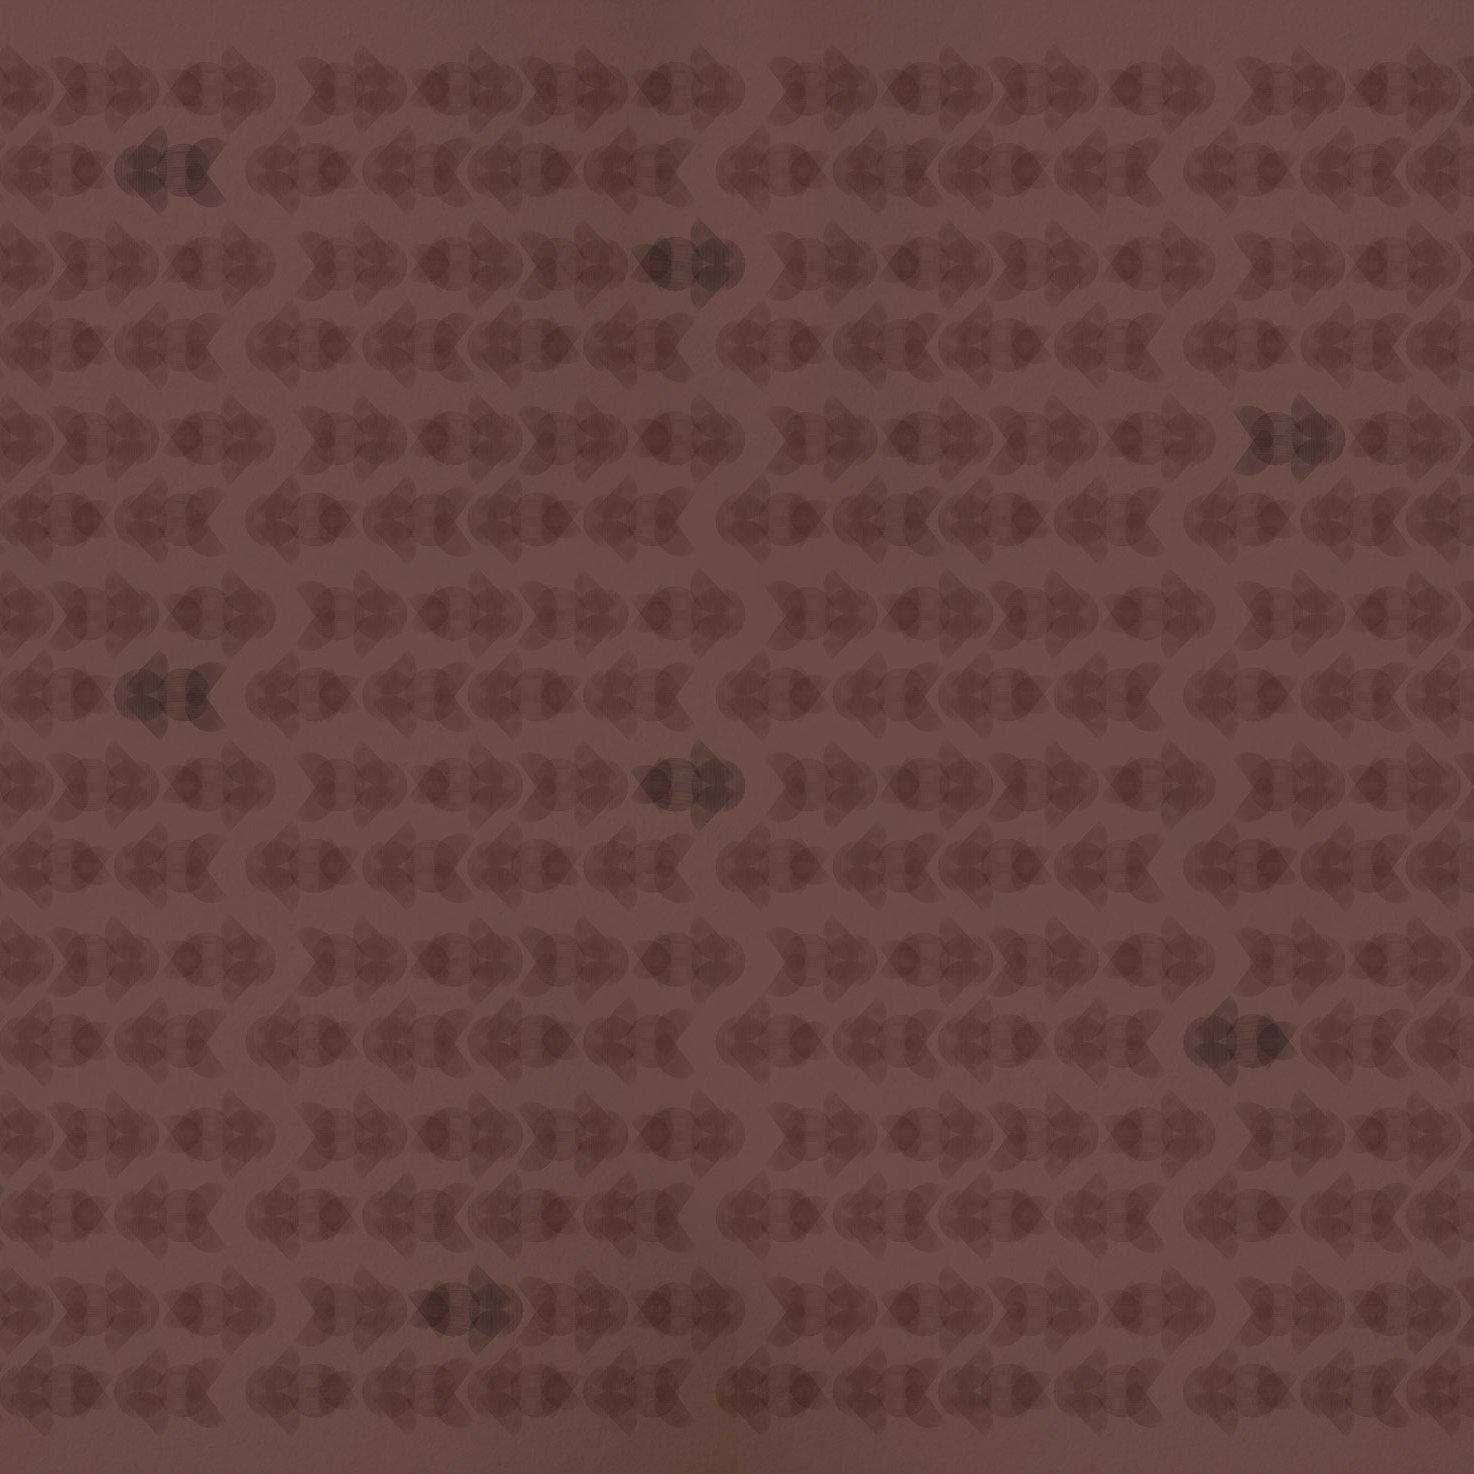 Stripes Ladybug-Digital Wallpaper-Tecnografica-Brown 3-70874-3D